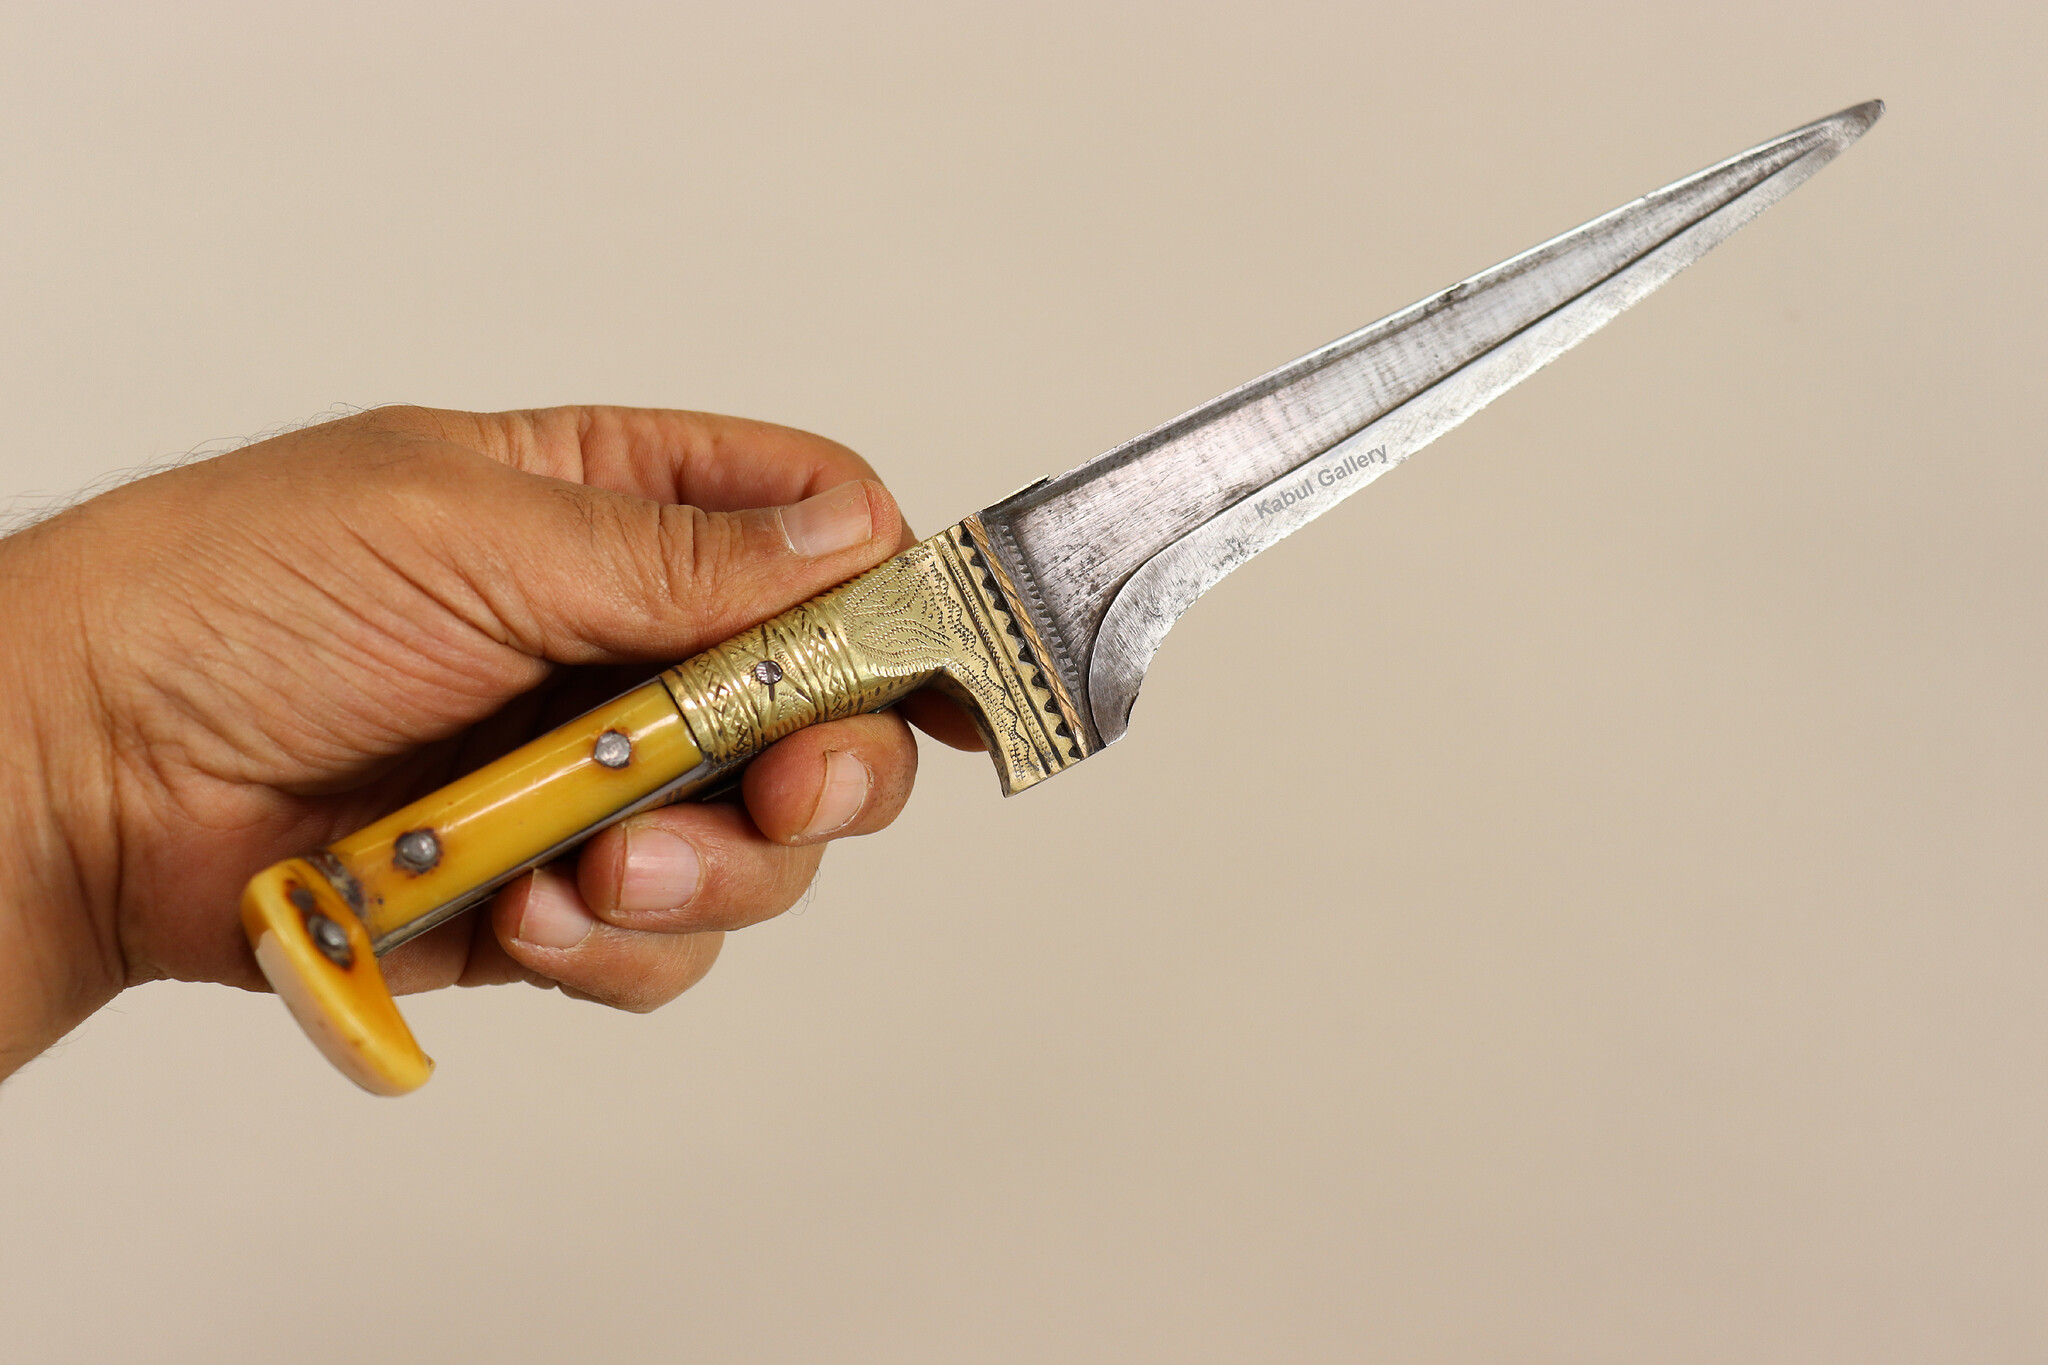 Antique Original Afghan Khyber Waziri knife dagger pesh kabz , karud, choora, pesh kabz 19th to 20th century, T shaped blade, No: MS23/ A114